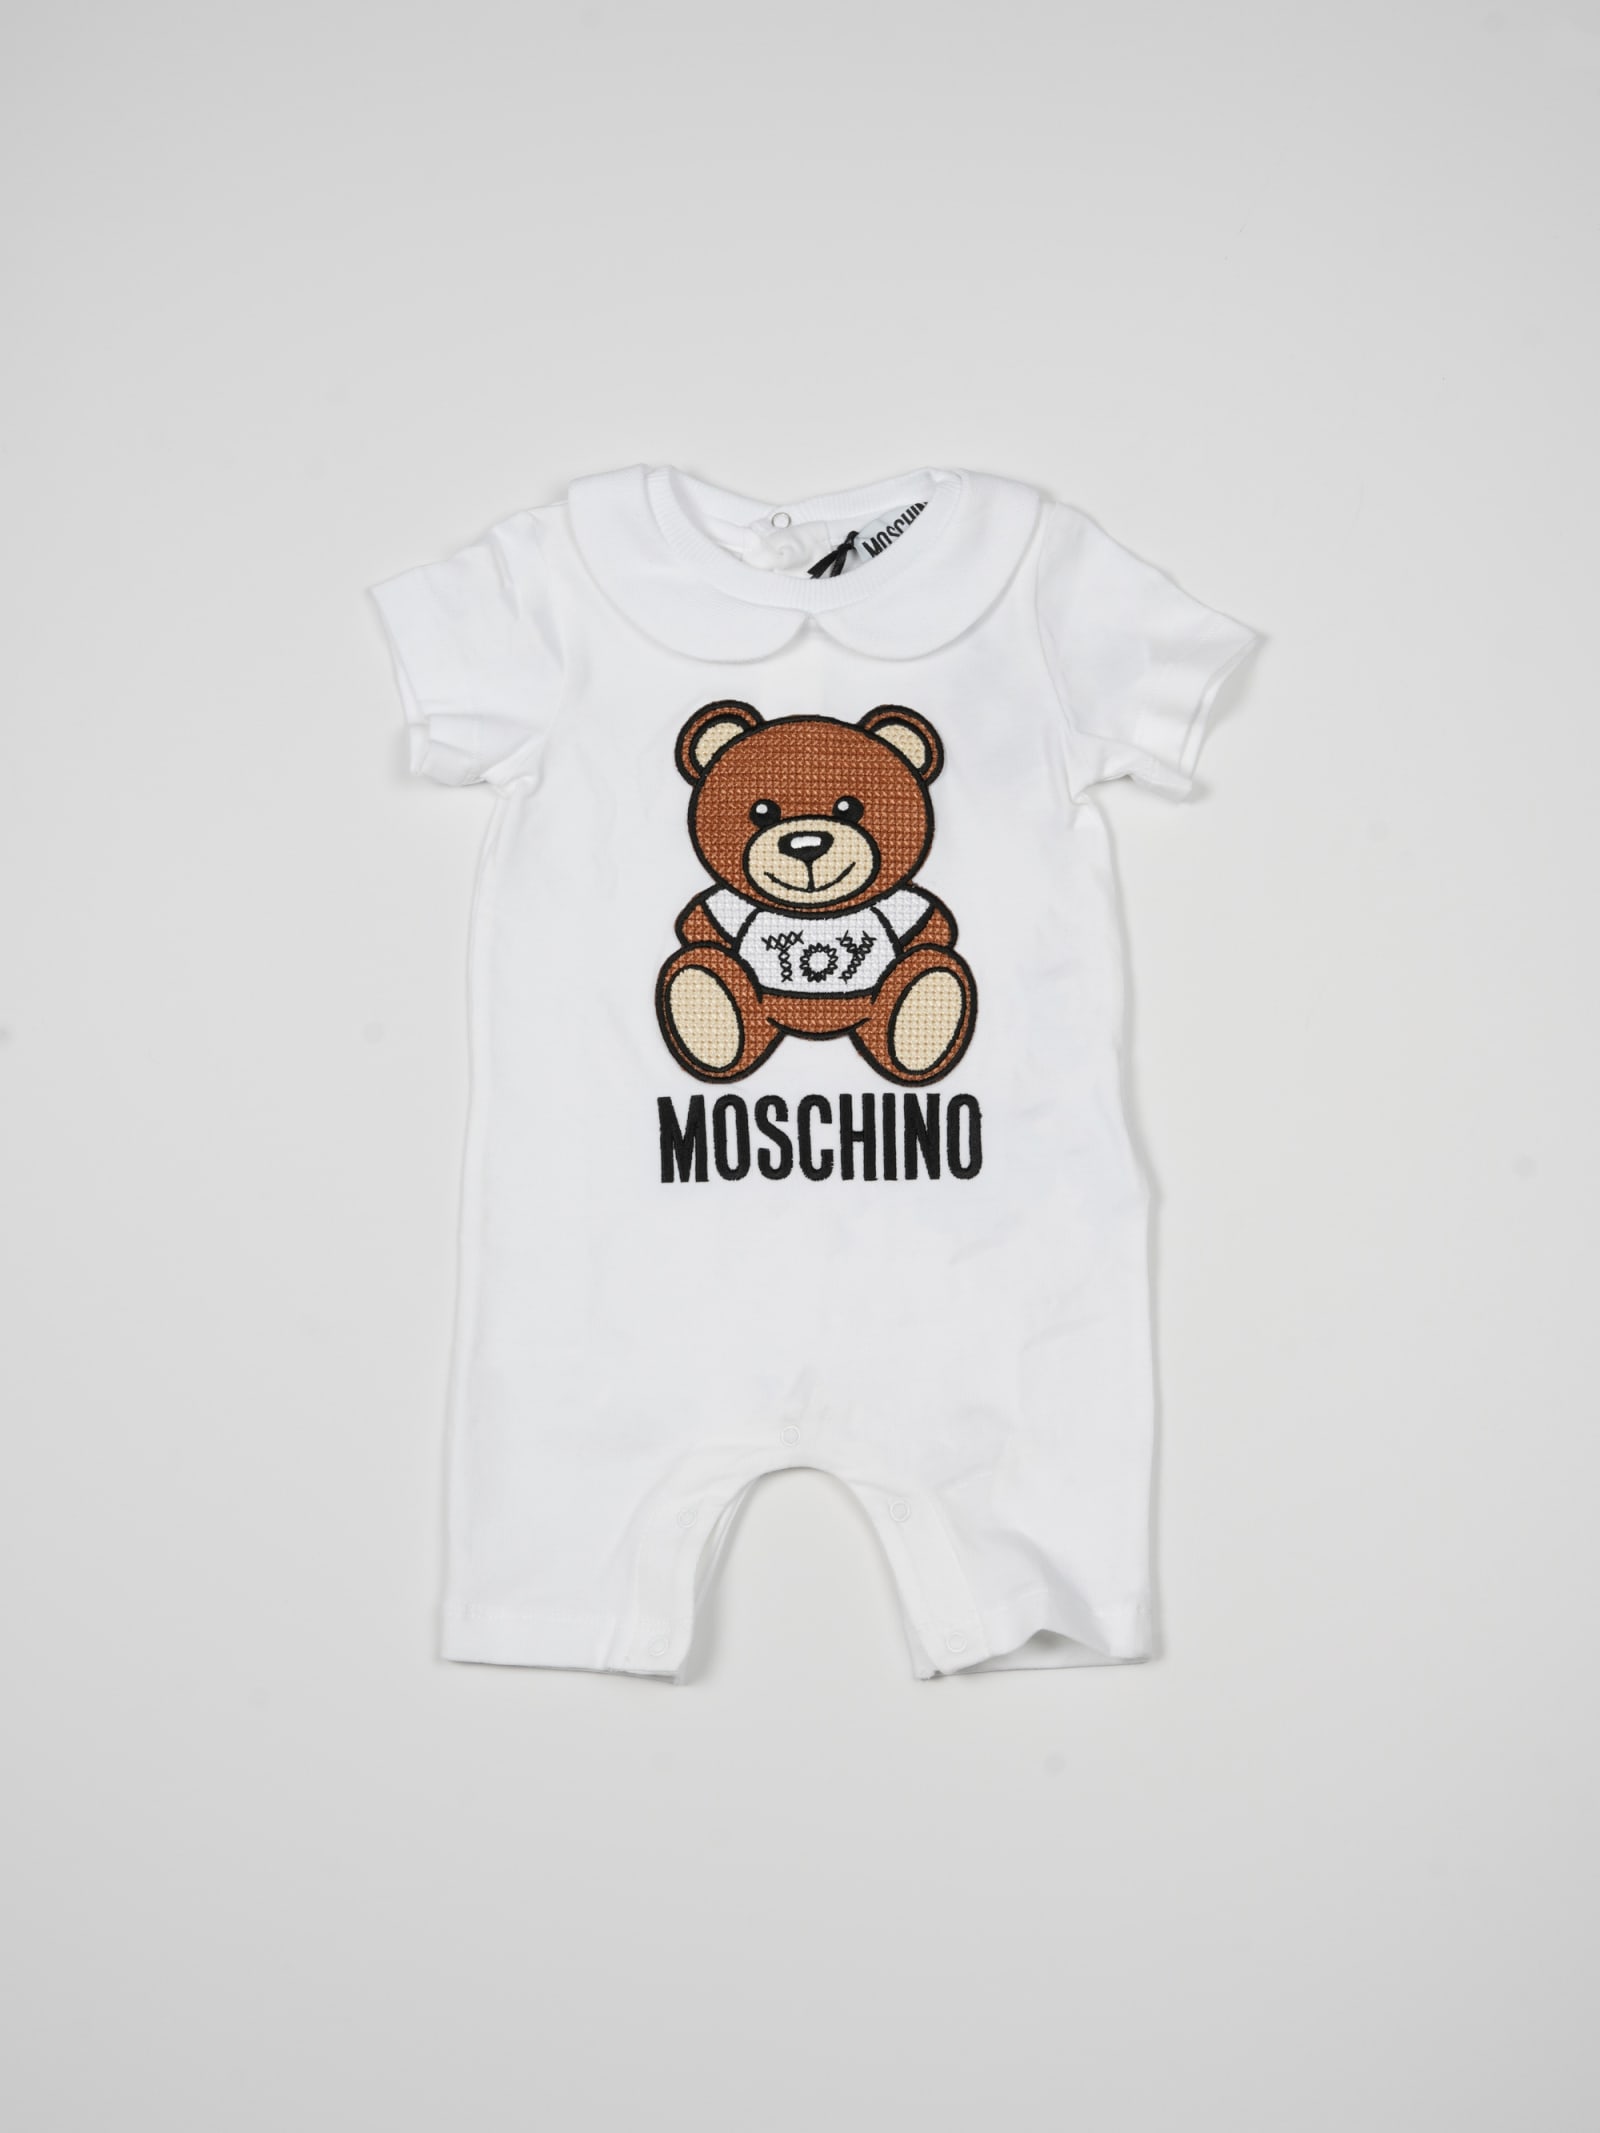 Moschino Baby Romper Suit